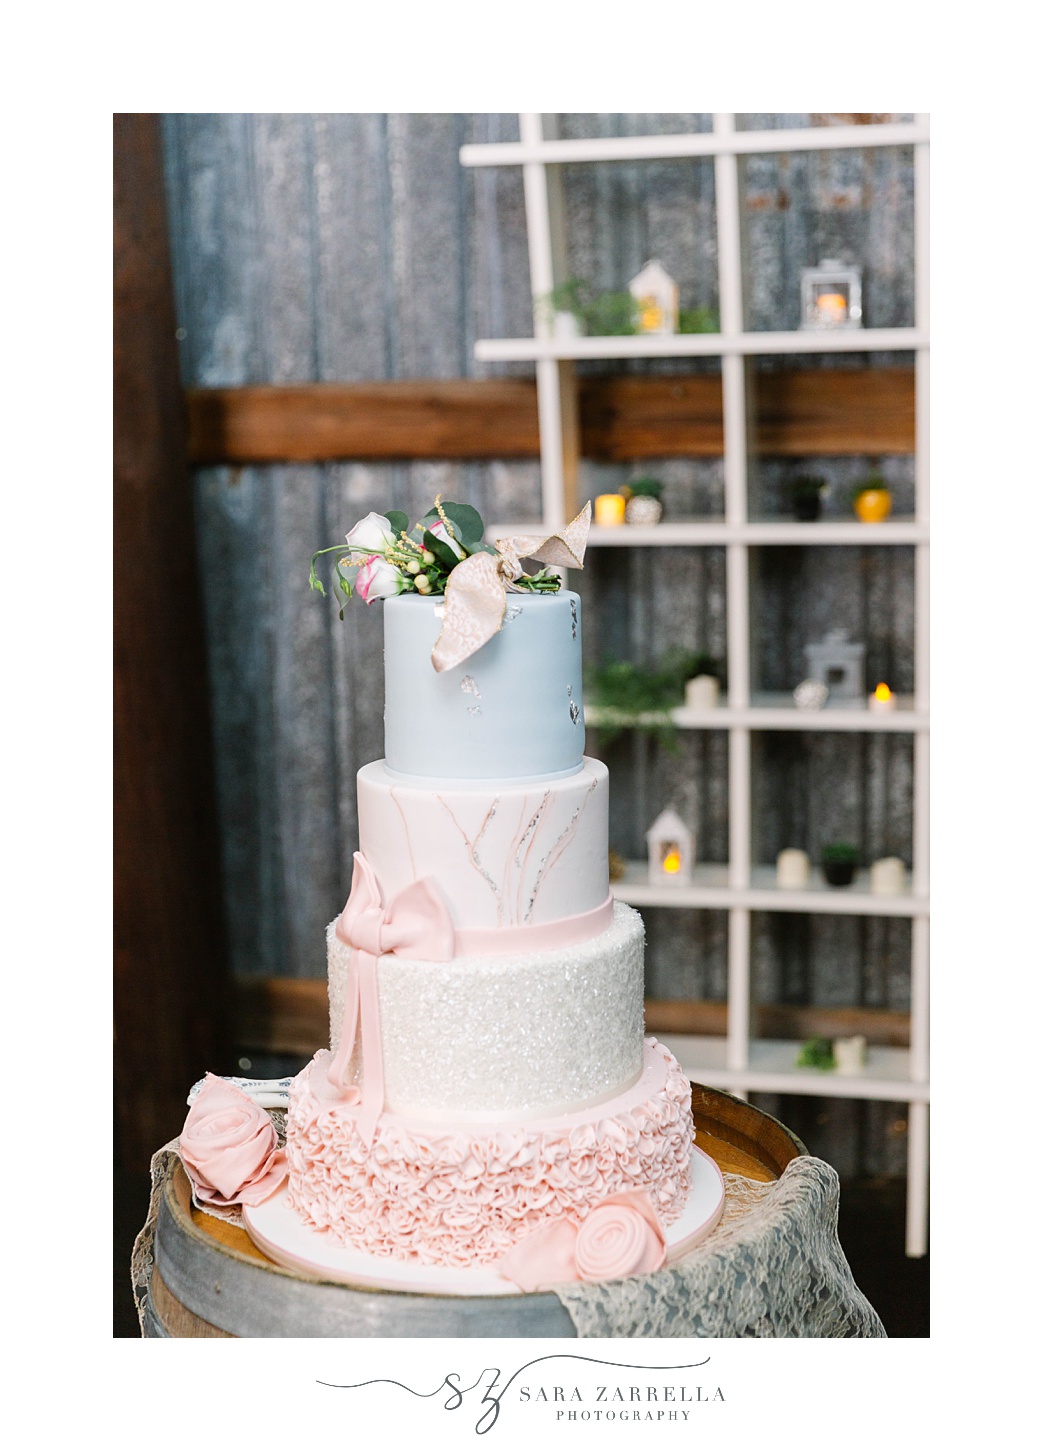 tiered wedding cake at MA wedding reception